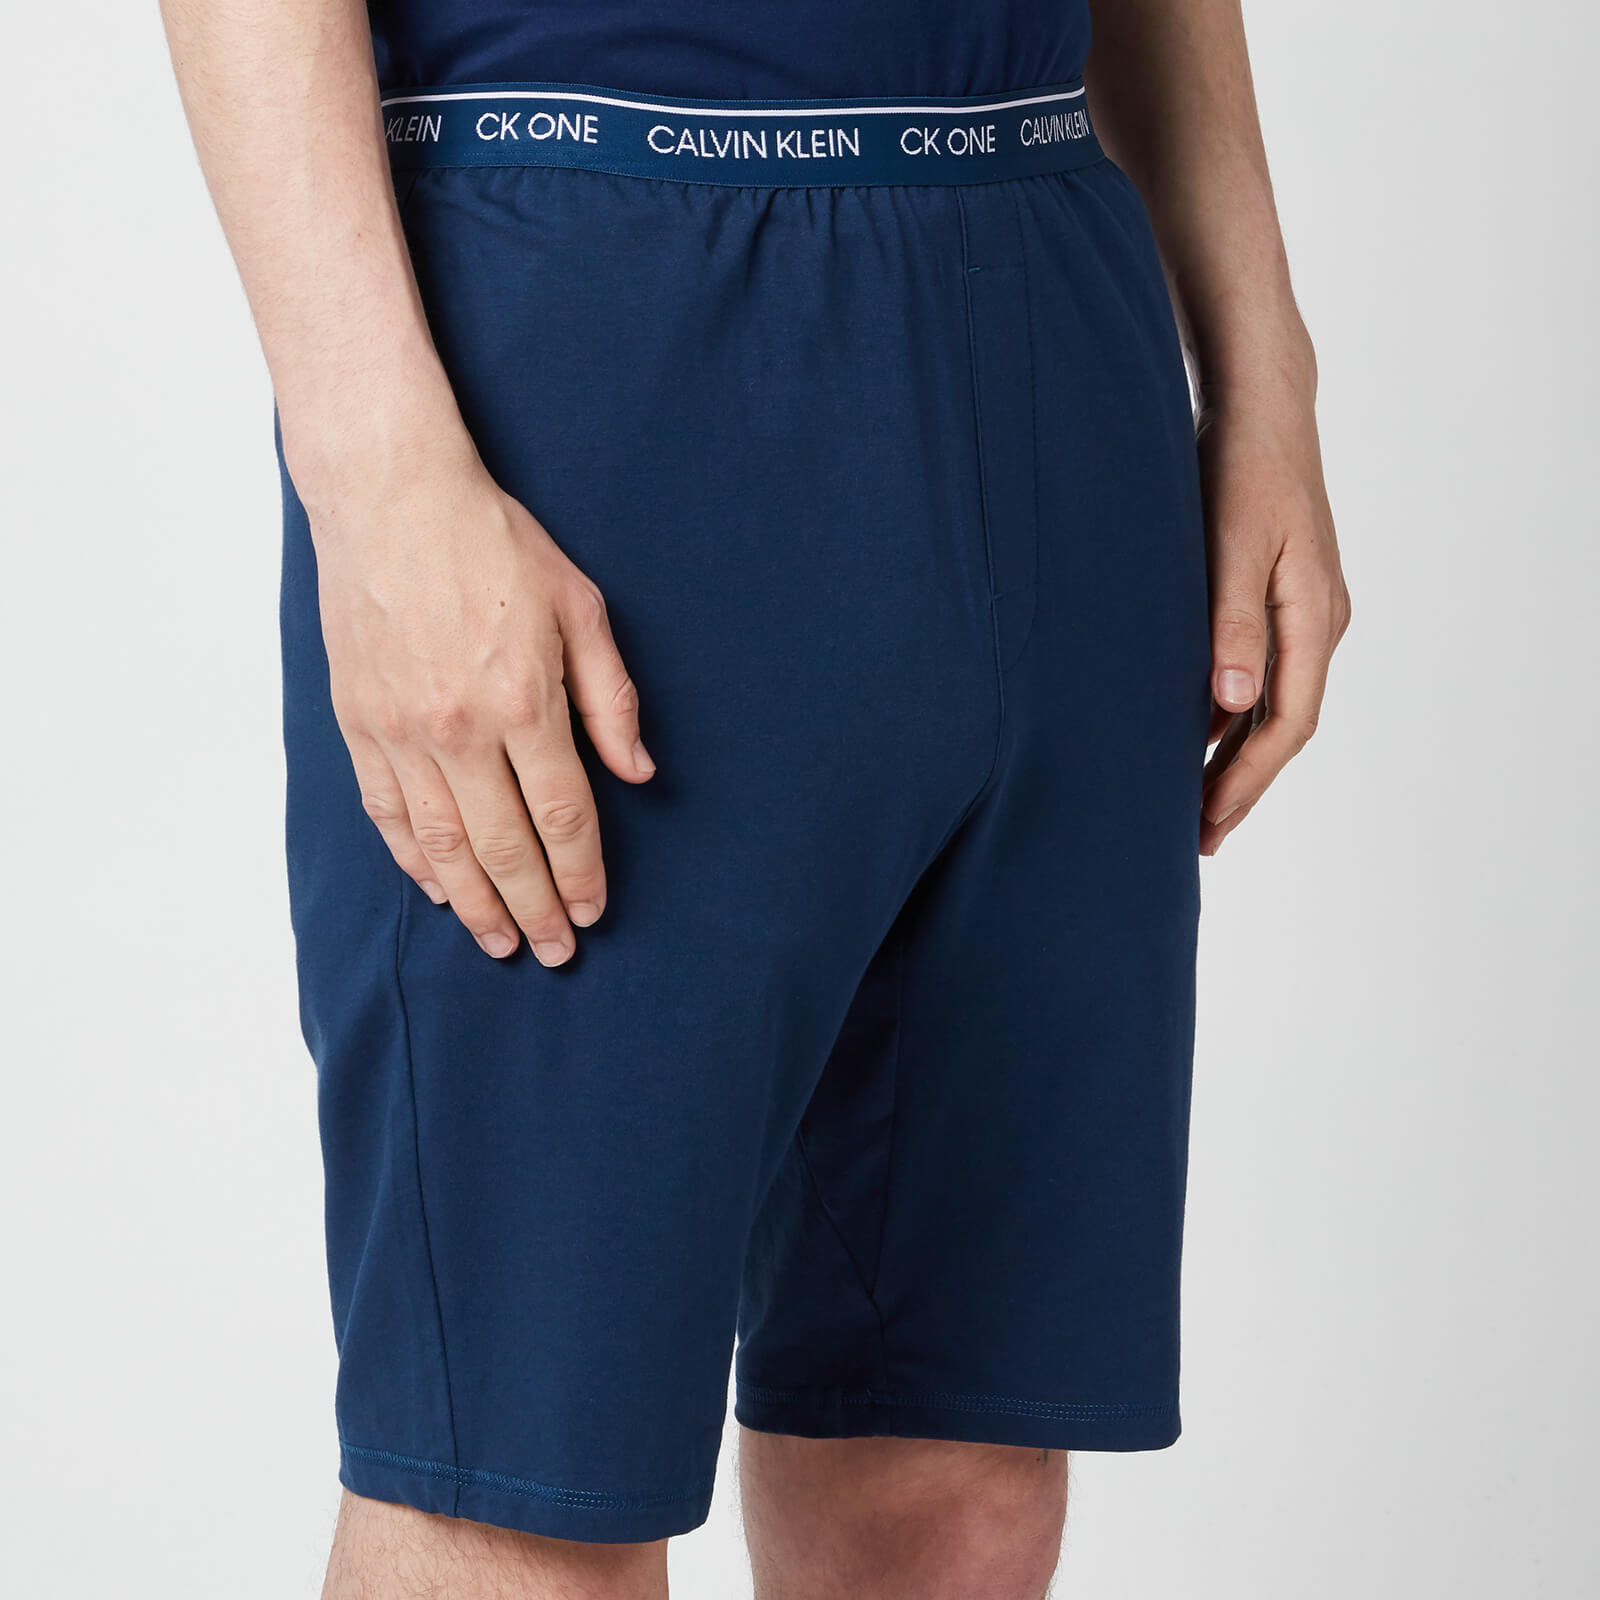 Calvin Klein Men's CK One Lounge Shorts - Lake Crest Blue - S